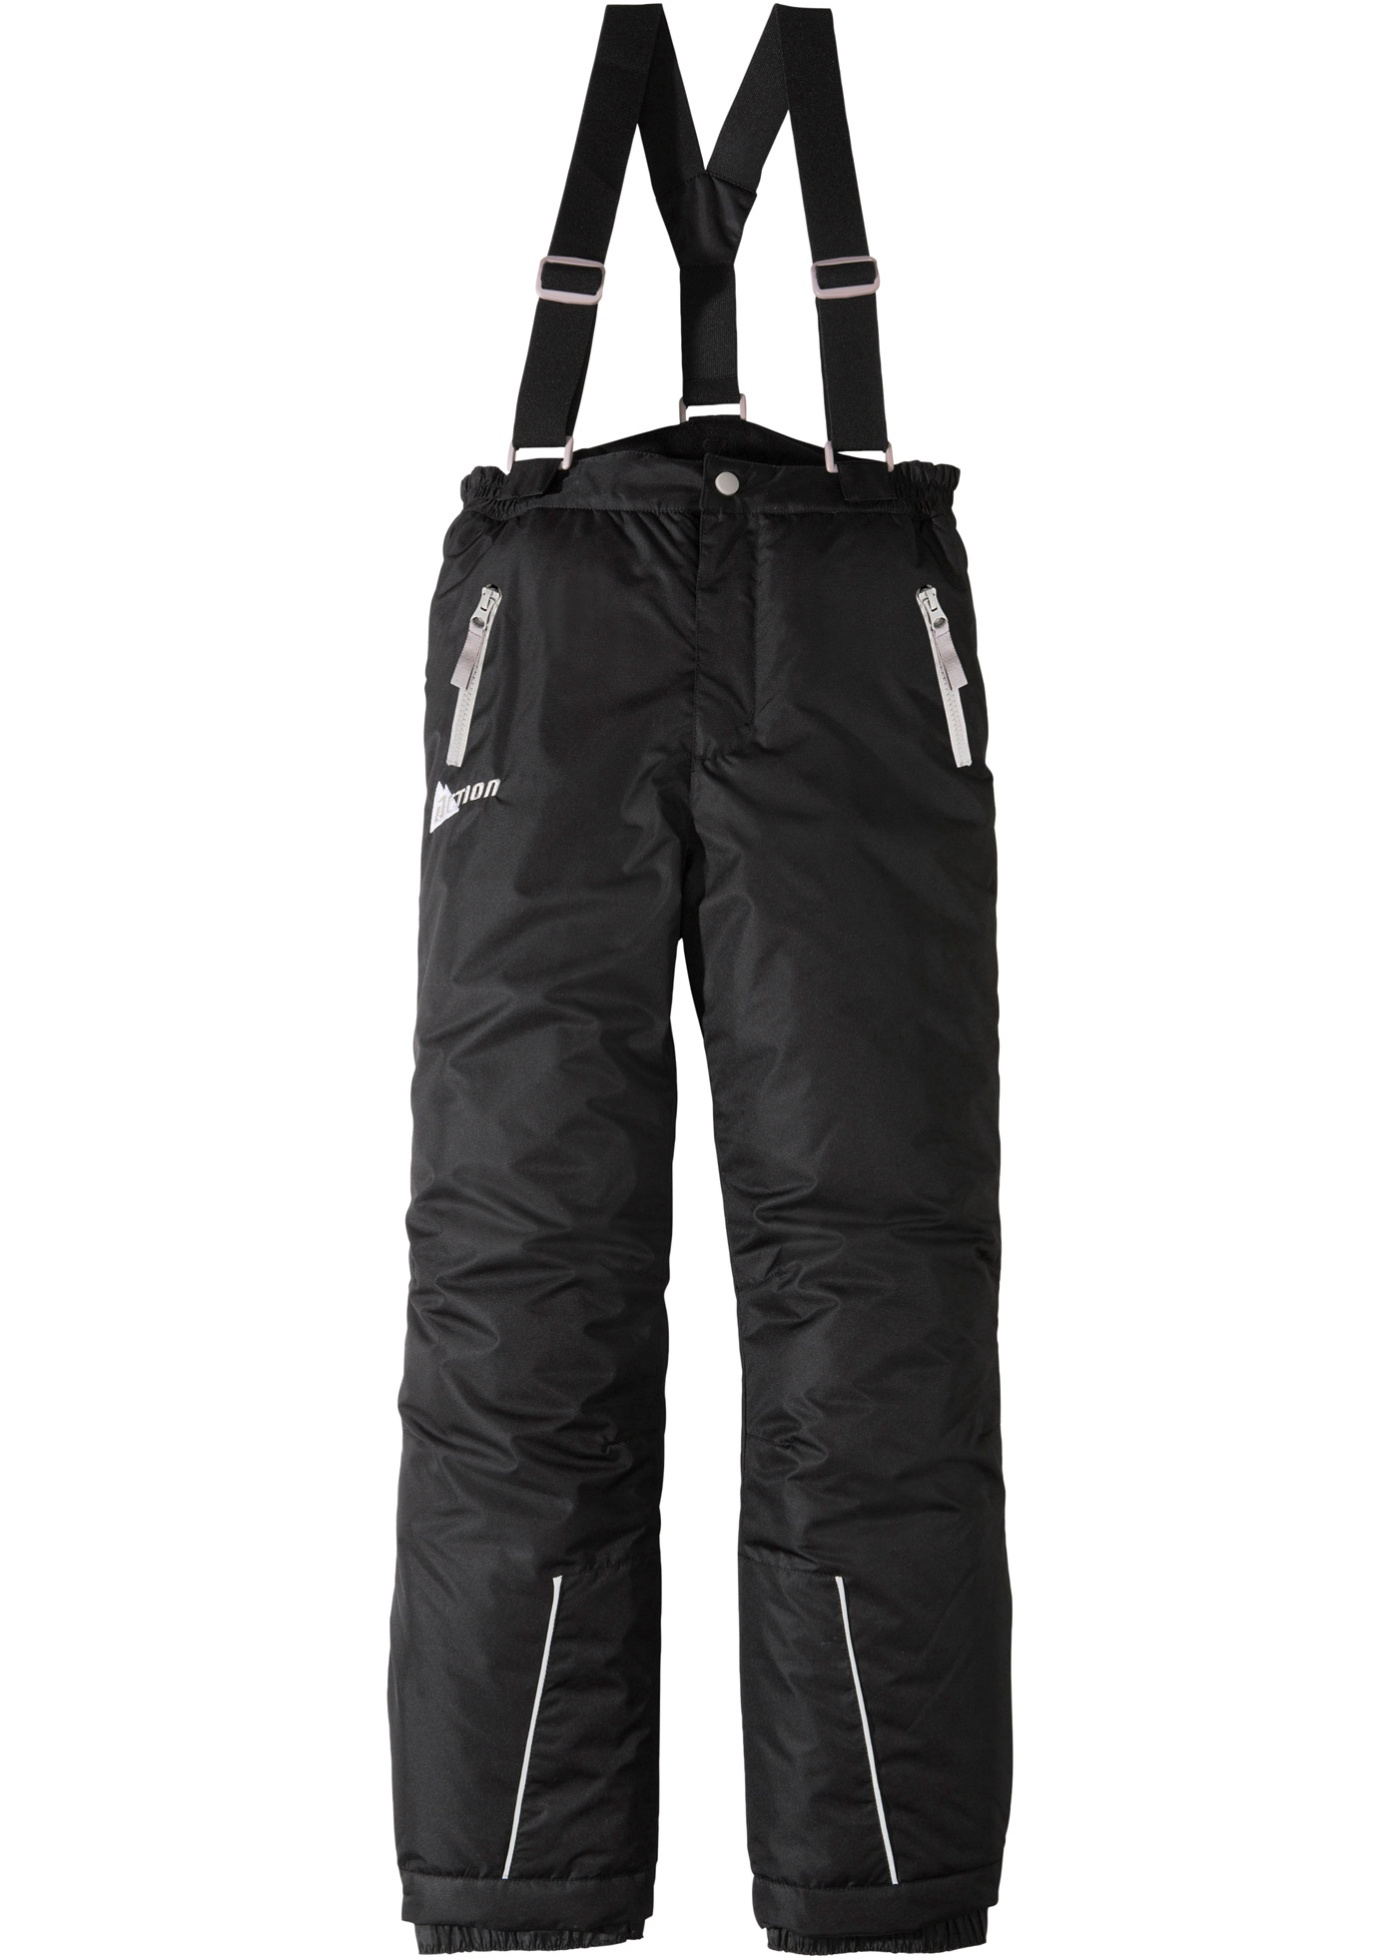 pantalon de ski garçon, imperméable et respirant